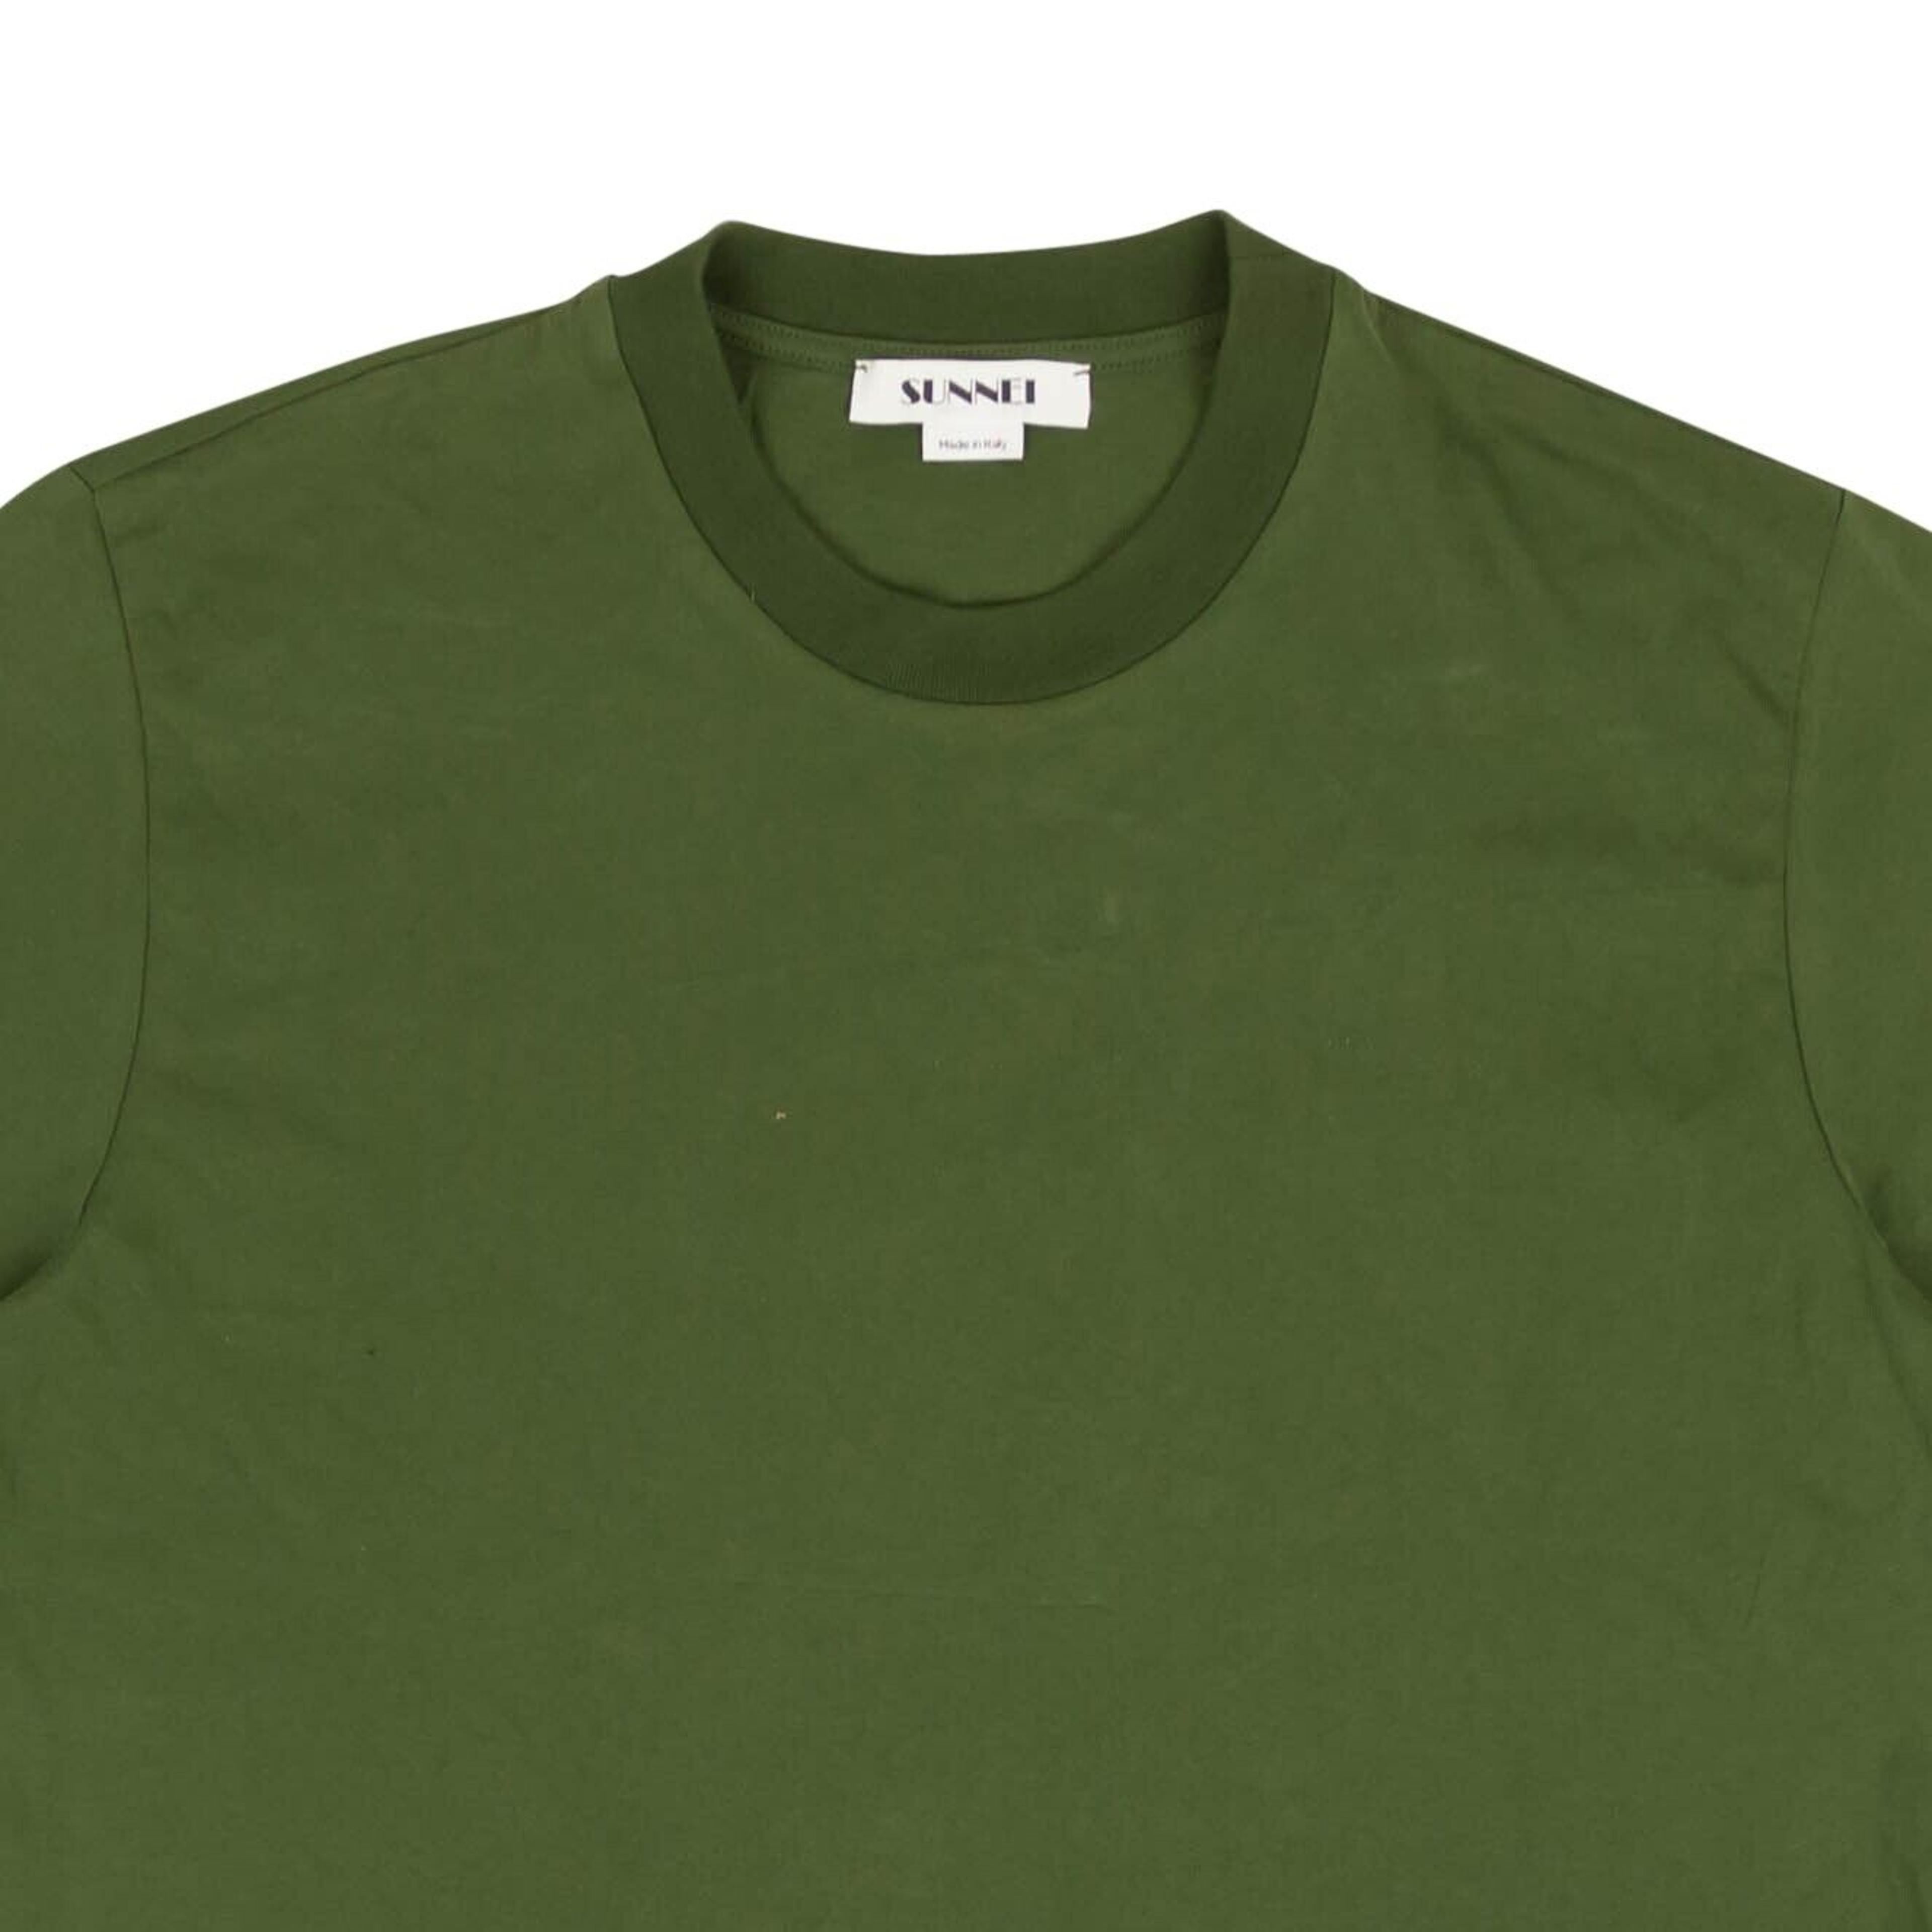 Alternate View 1 of Men'S T-Shirts - Green/White